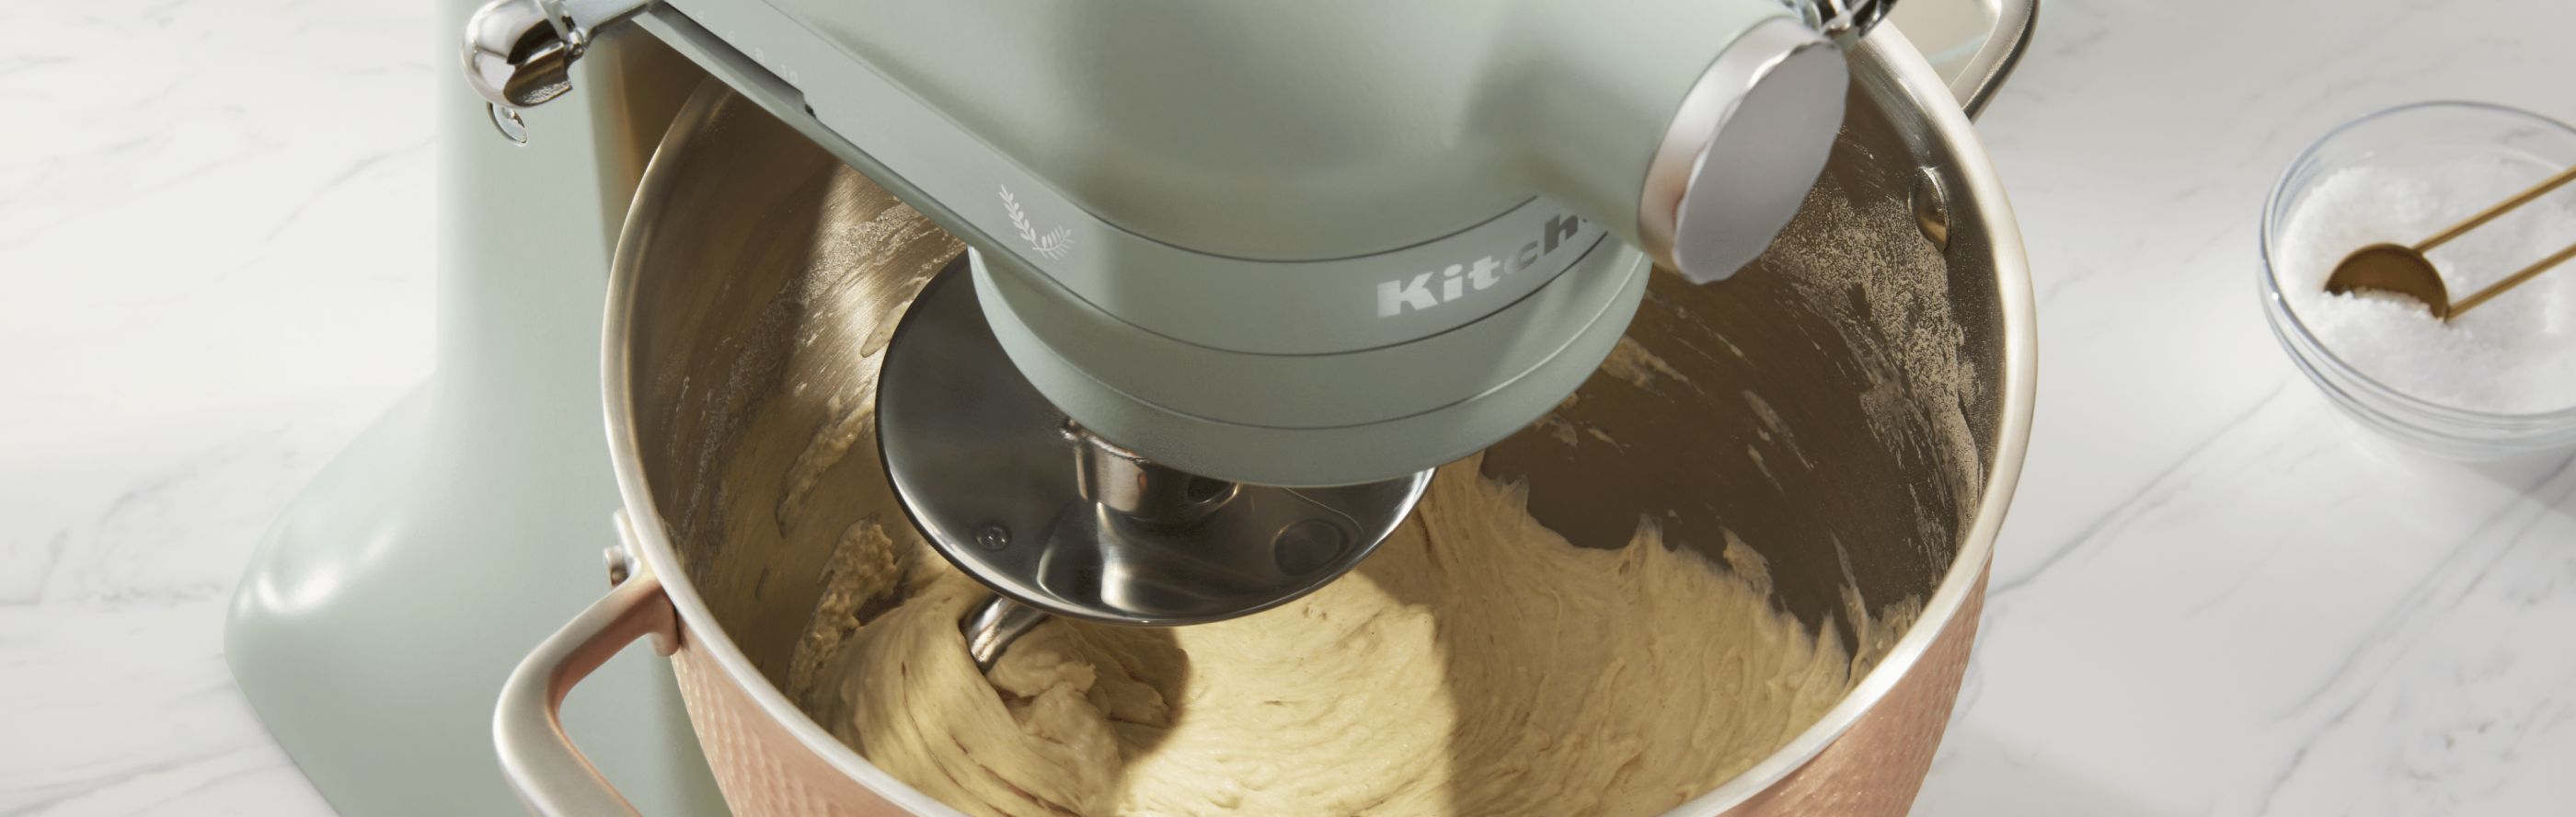 KitchenAid® stand mixer with dough hook mixing dough